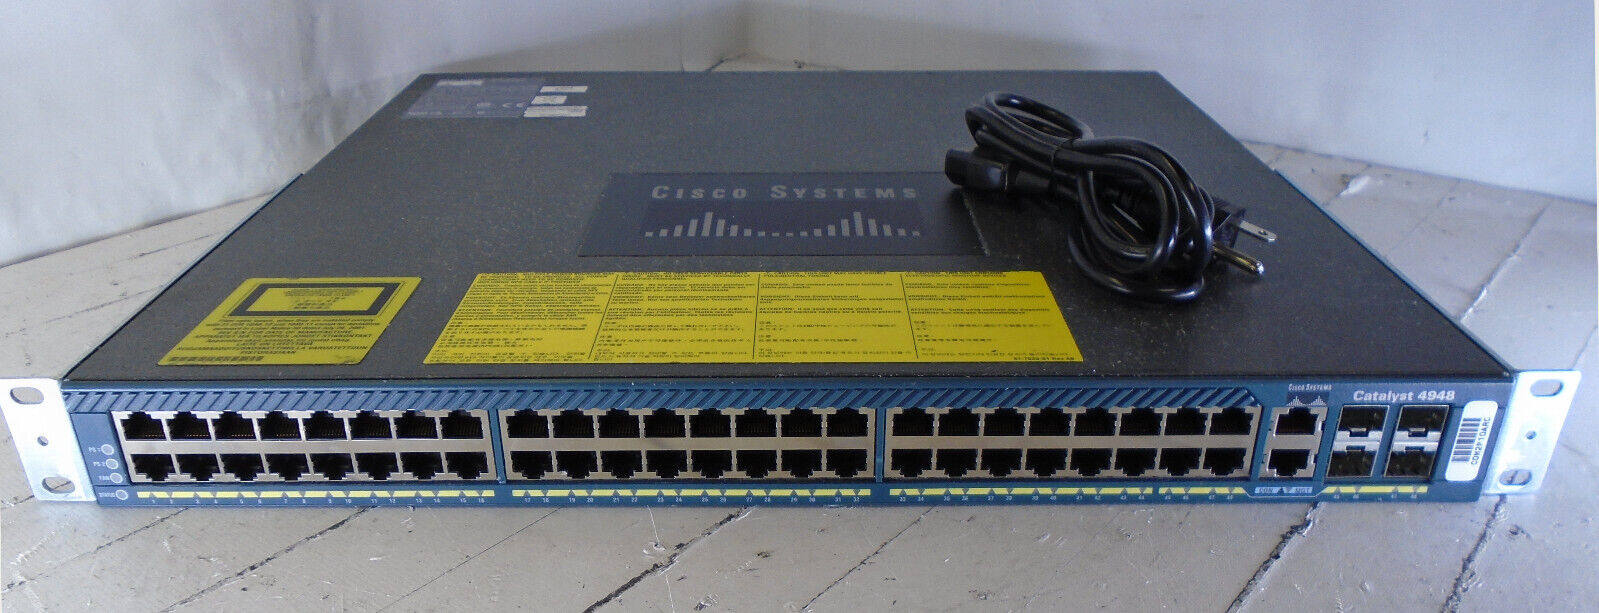 Cisco WS-C4948-S V06 48 Port Gigabit Ethernet Switch 4-Port SFP w/ Dual PSU